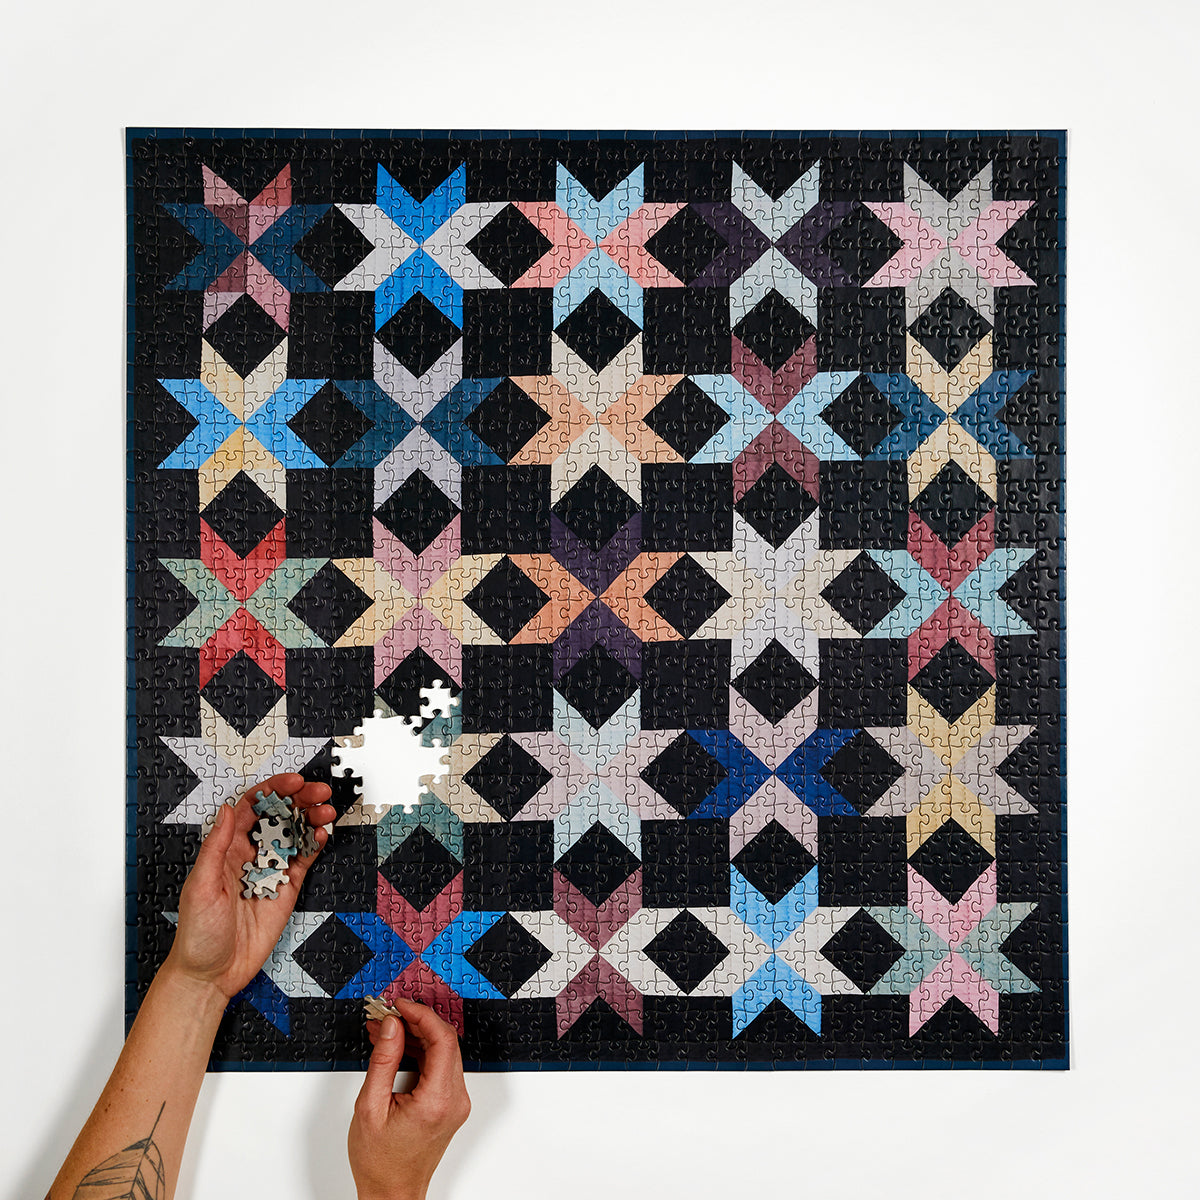 New York Quilt (1000 pc puzzle)